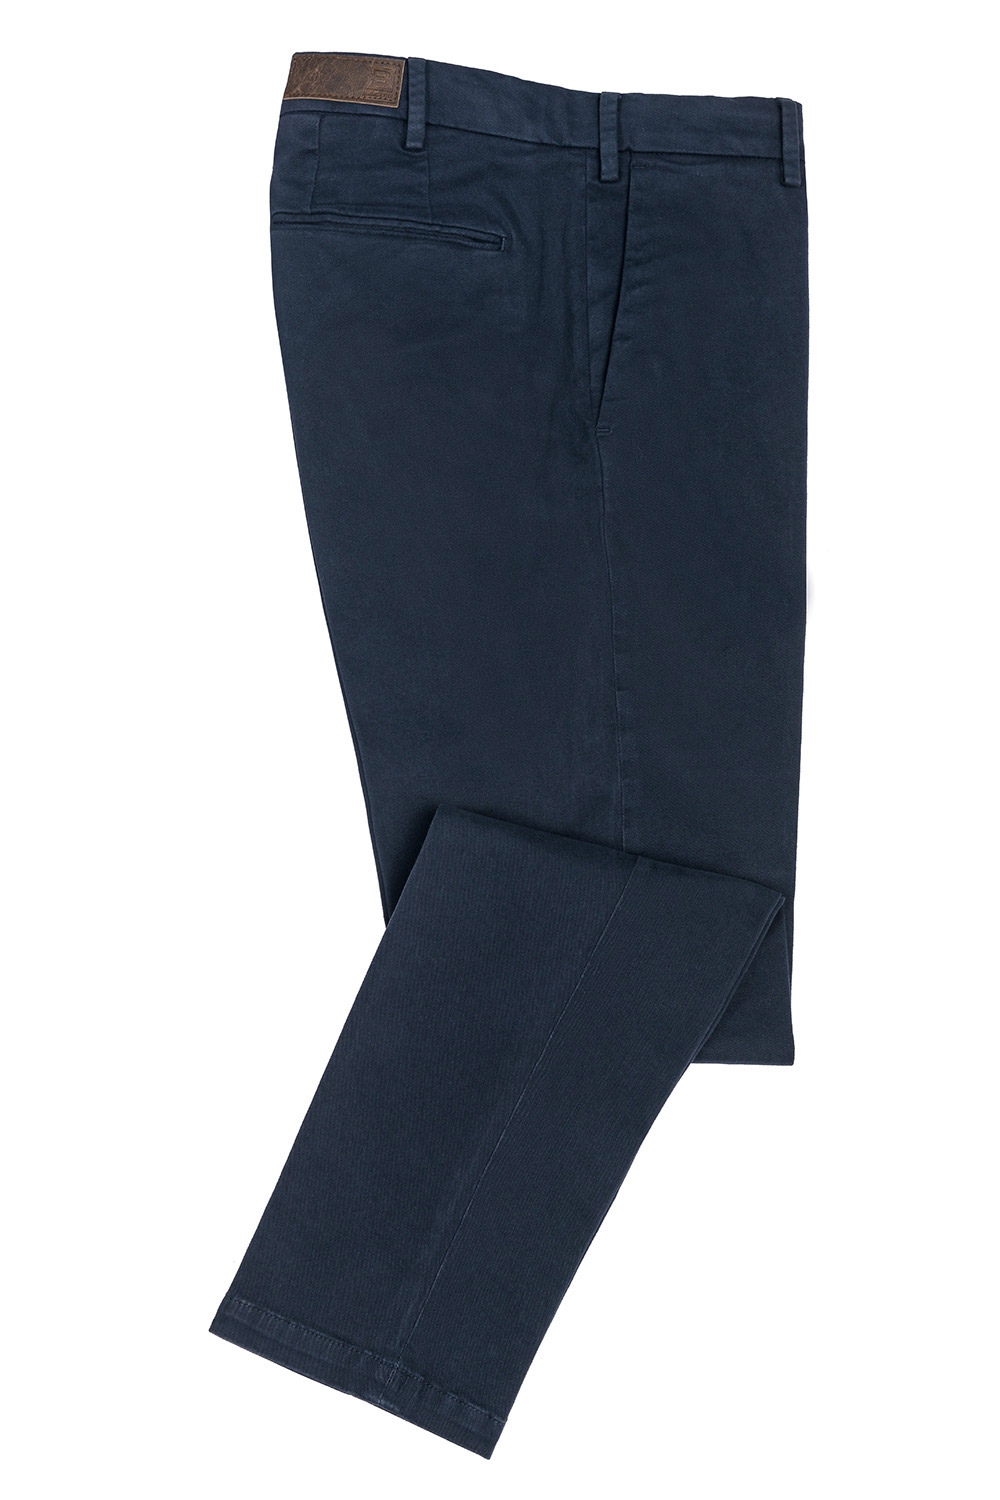 Pantaloni regular bleumarin uni 0